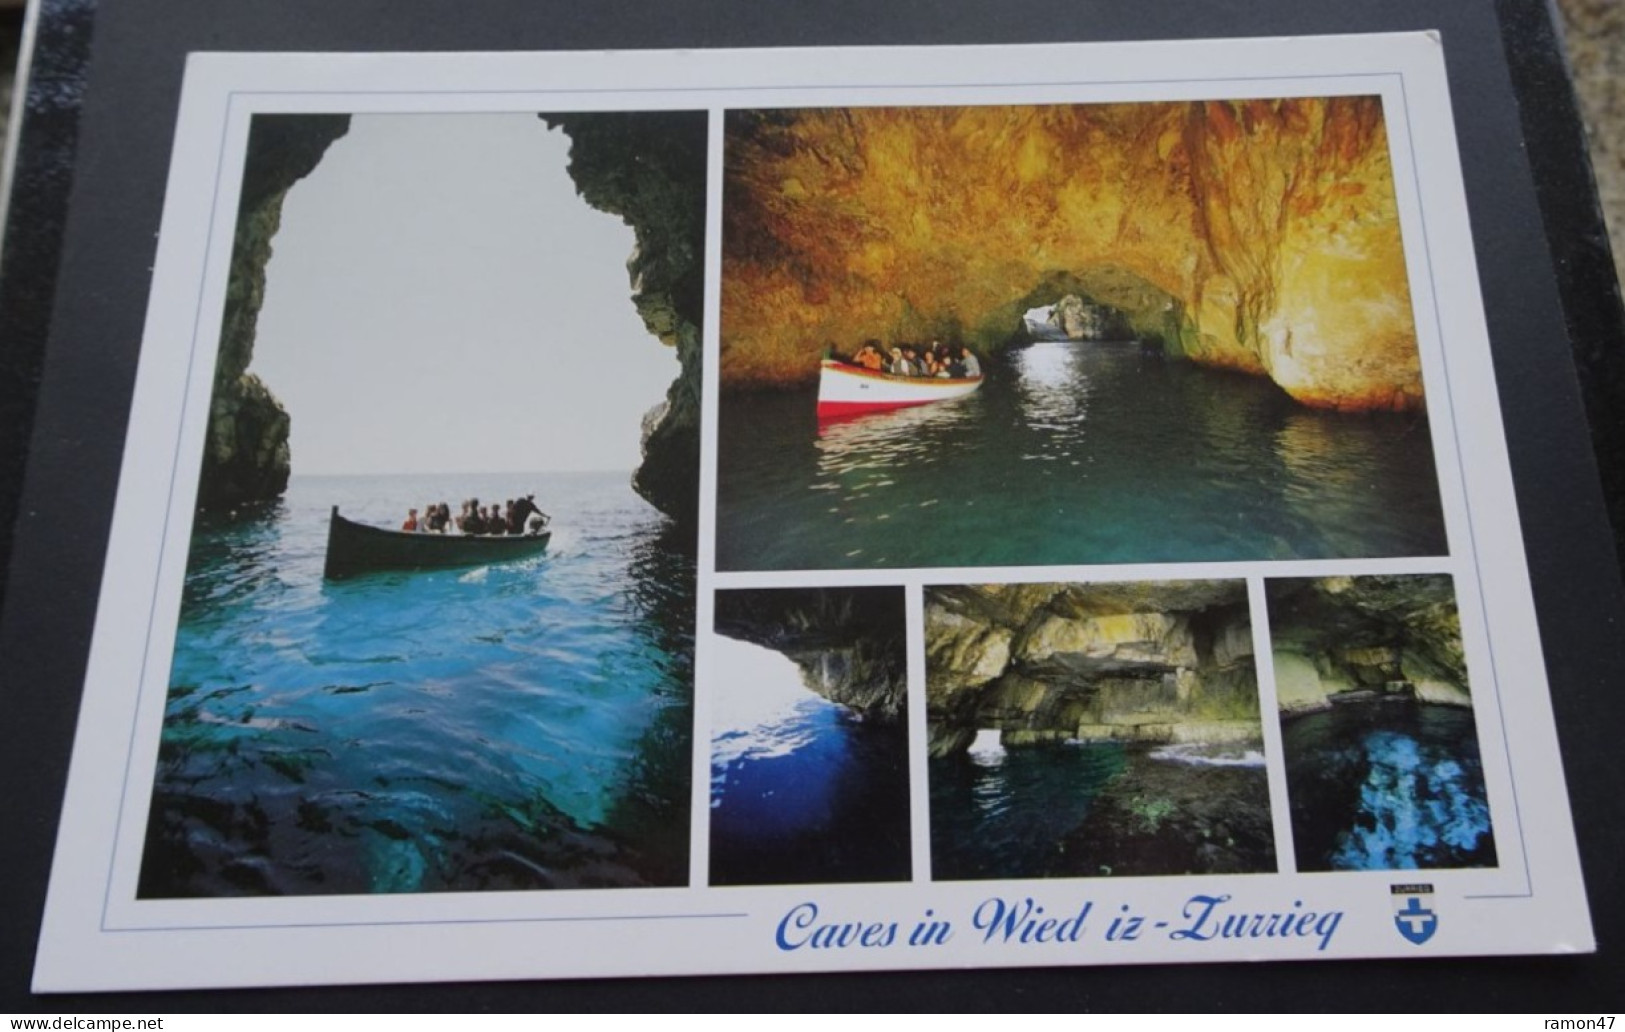 Caves In Wied Iz Zurrieq - Maltese Archipelago - Distr. By Bol, Malta - # 202 - Malta